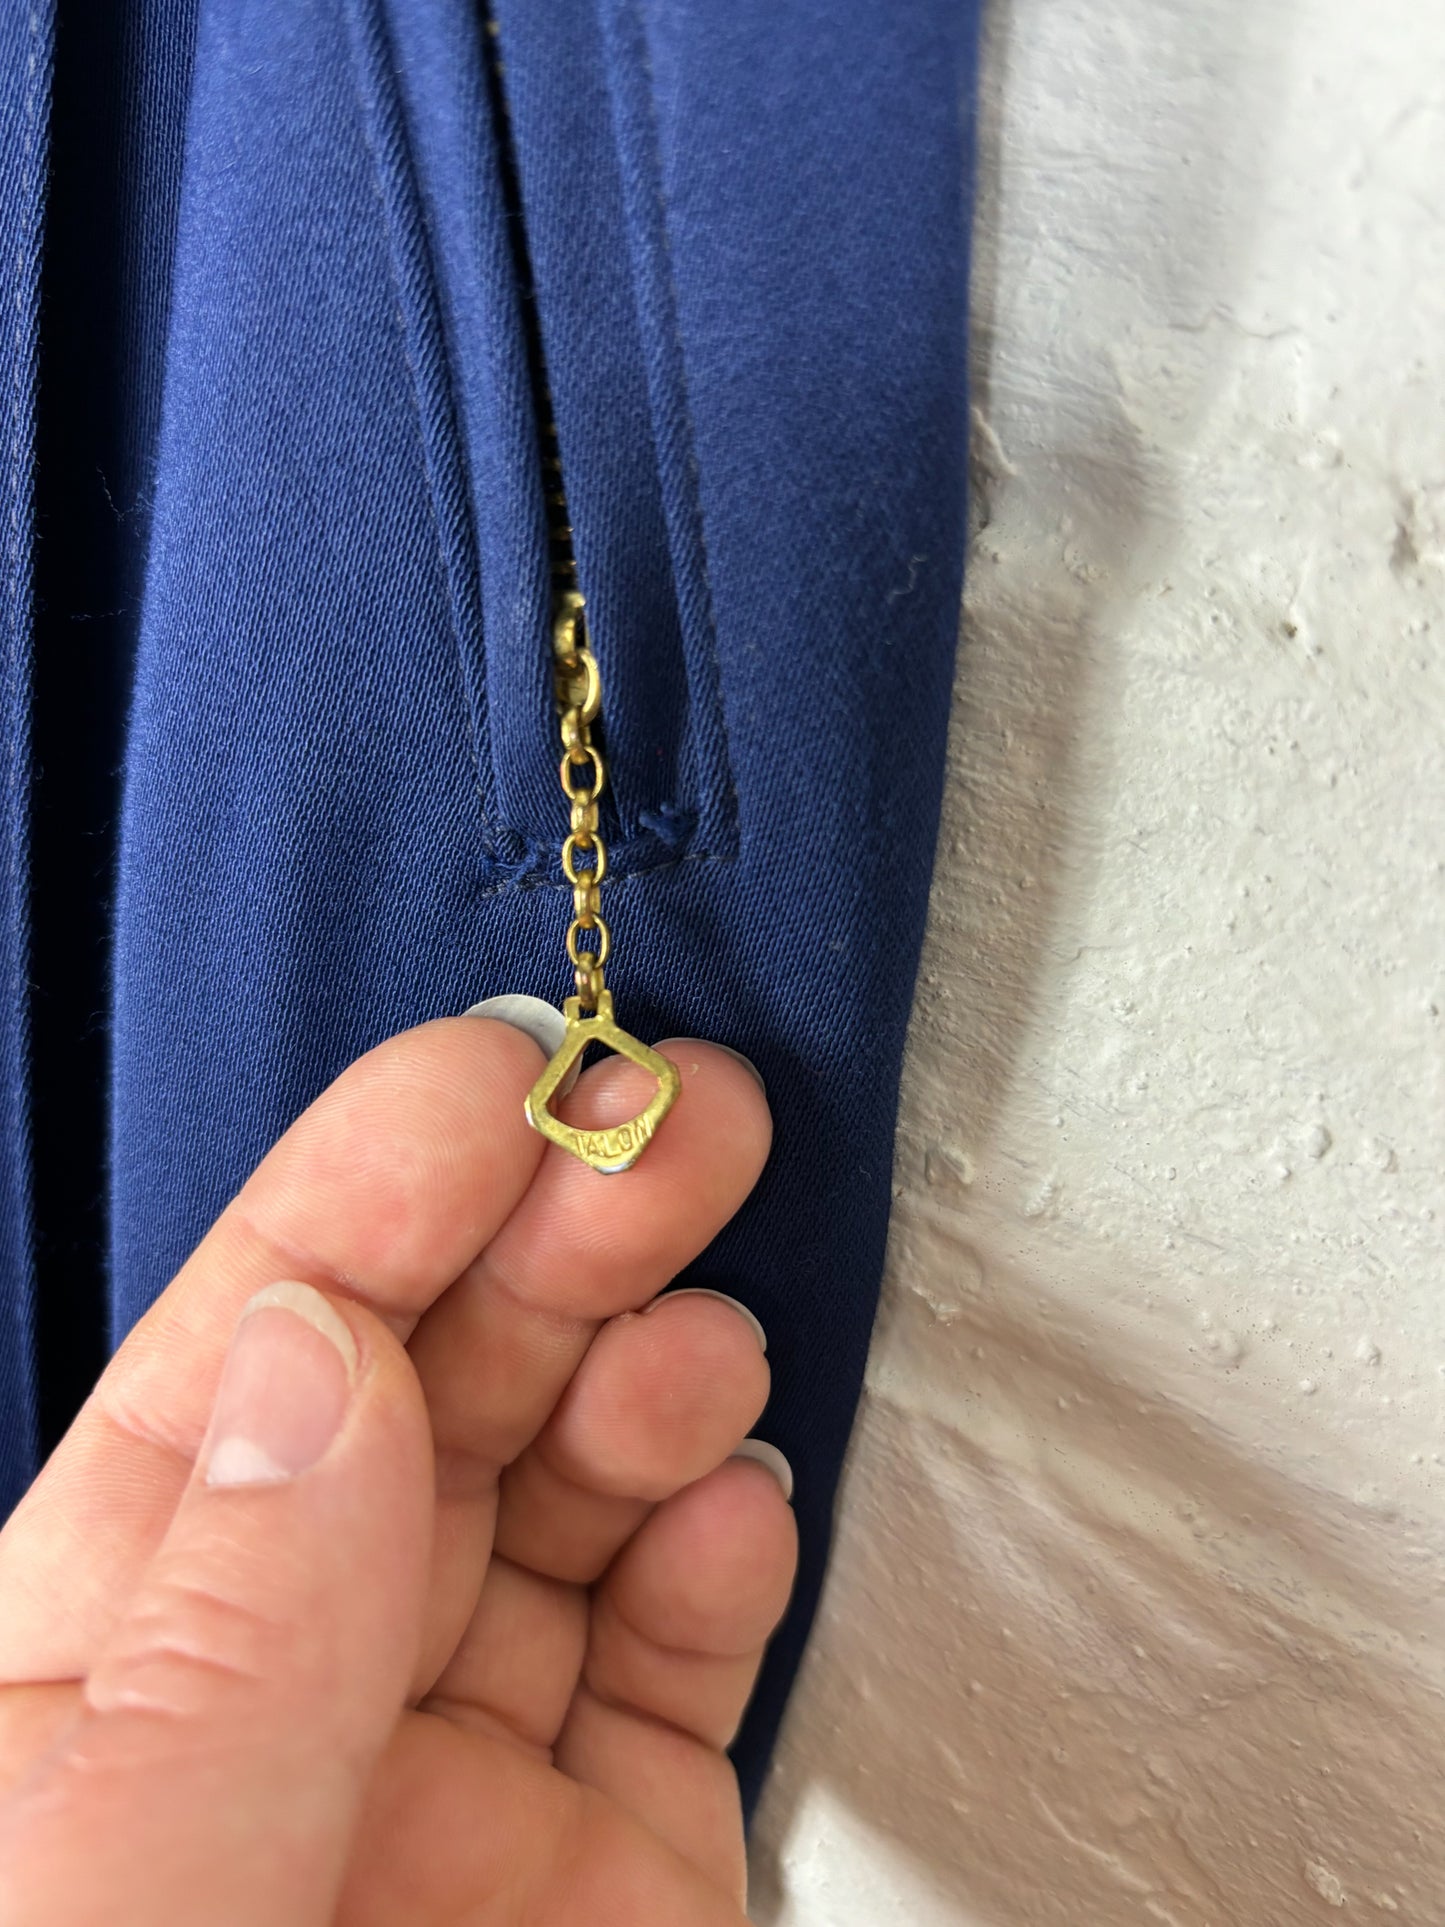 40's Navy Blue Wool High Waist Ski Pants | W: 28"